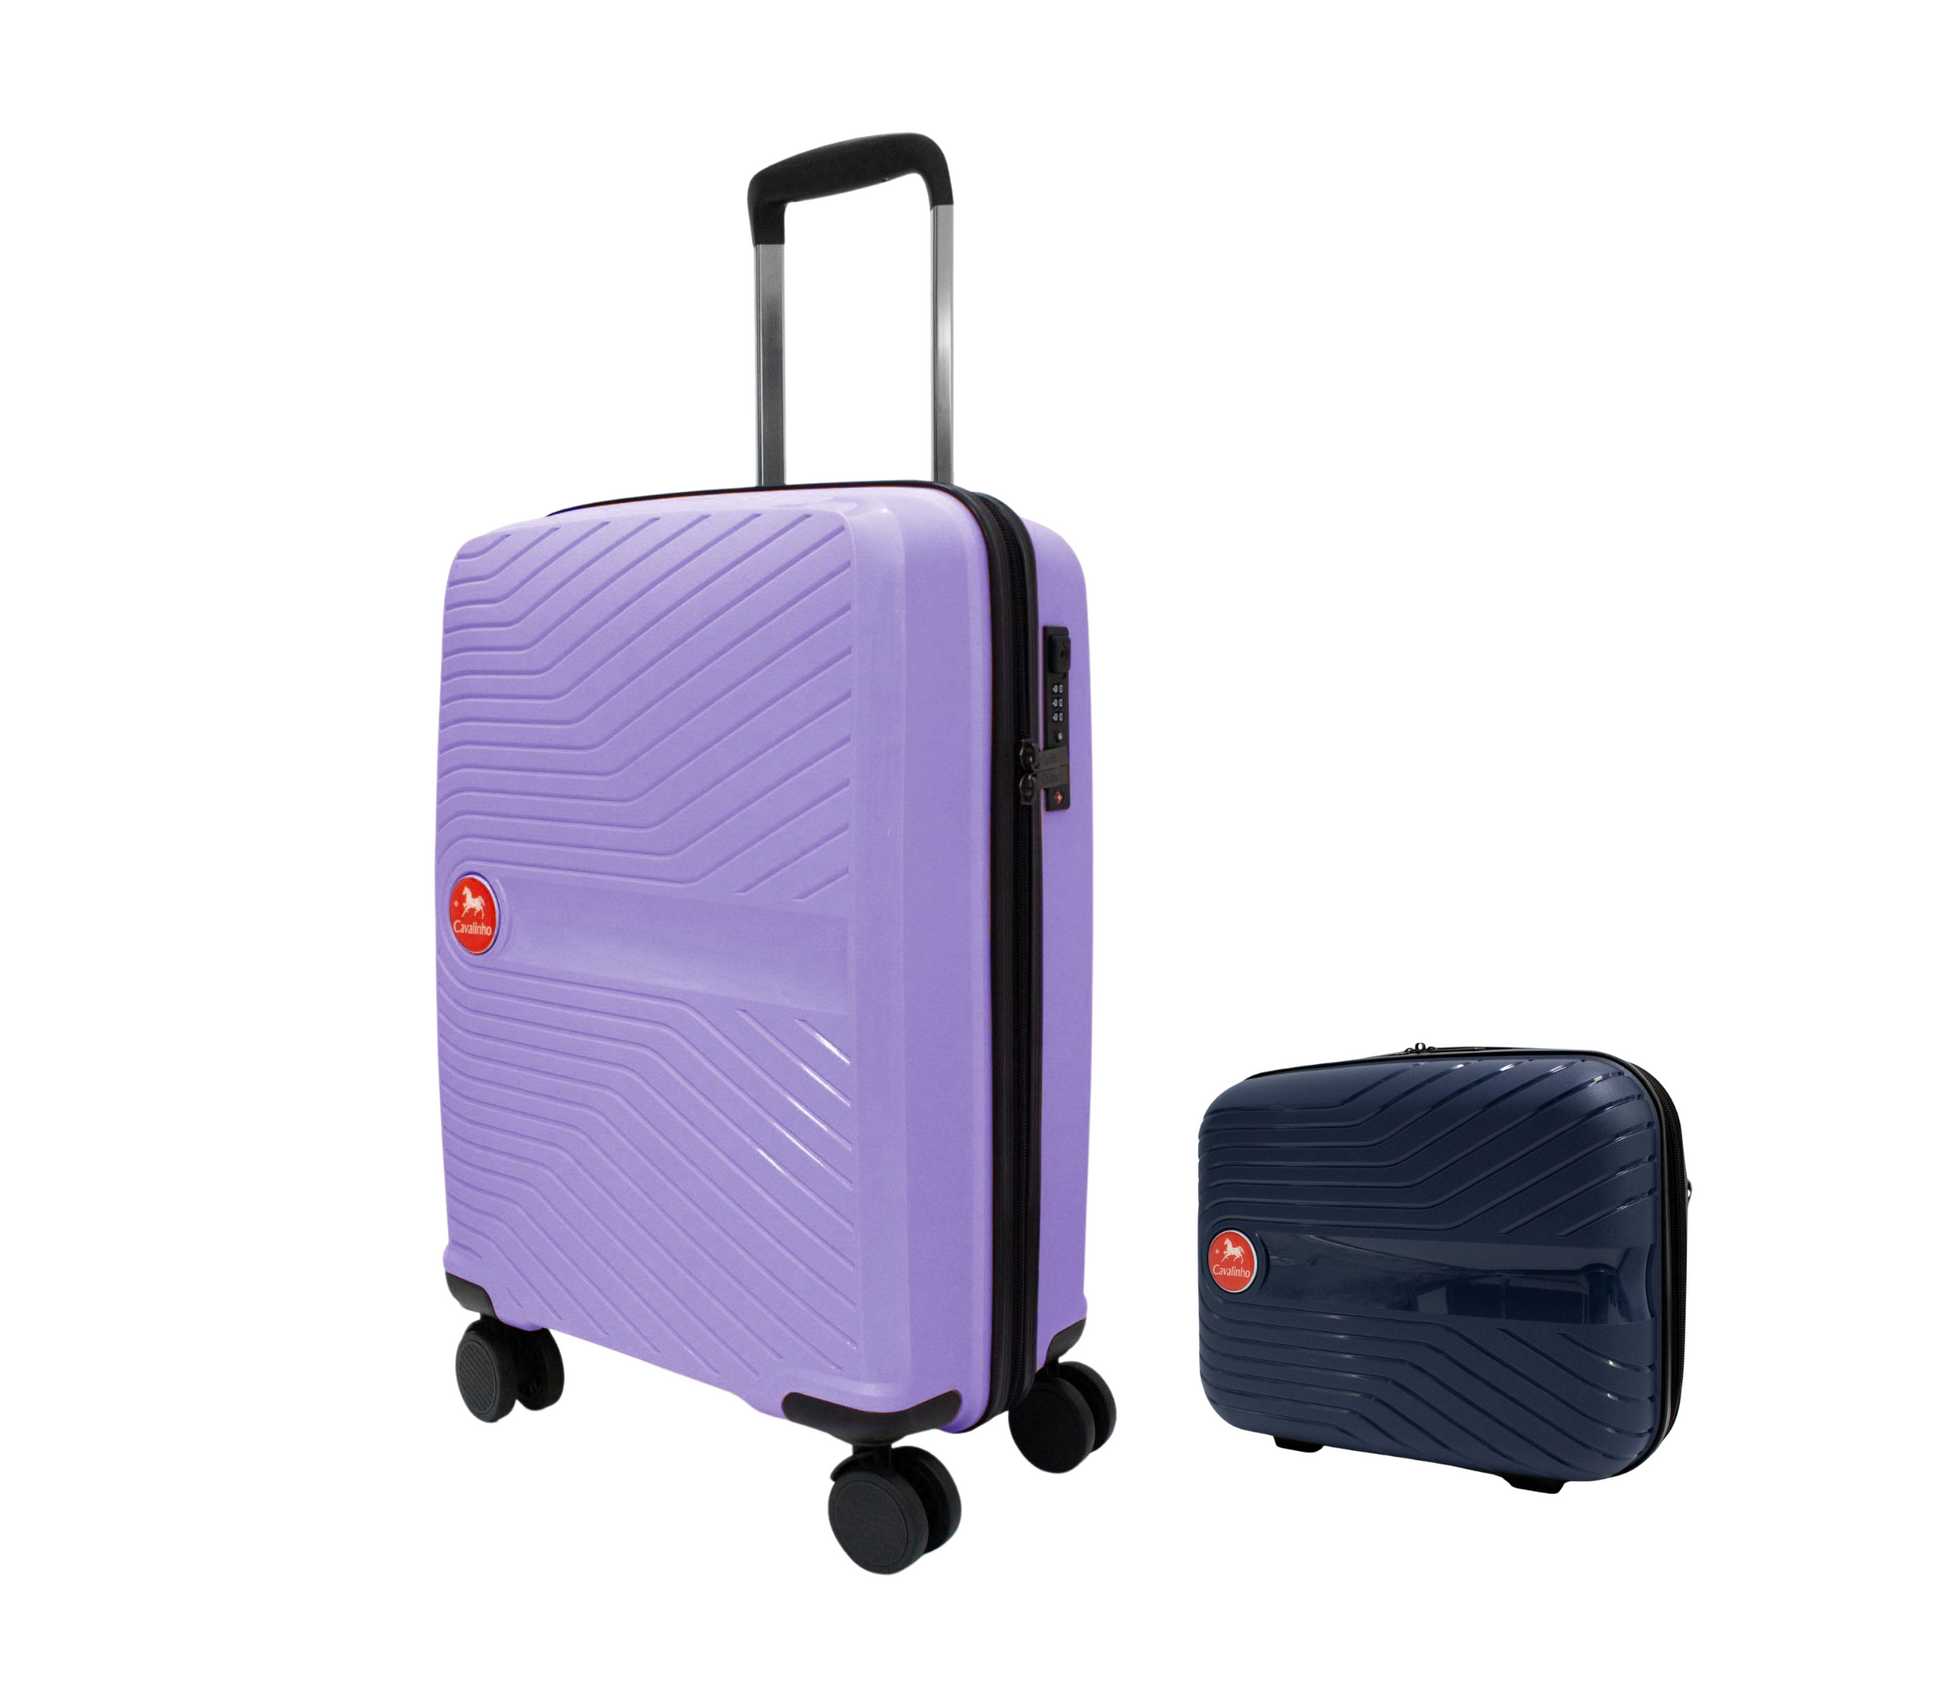 Cavalinho Colorful 2 Piece Luggage Set (15" & 19") - Navy Lilac - 68020004.0339.S1519._3